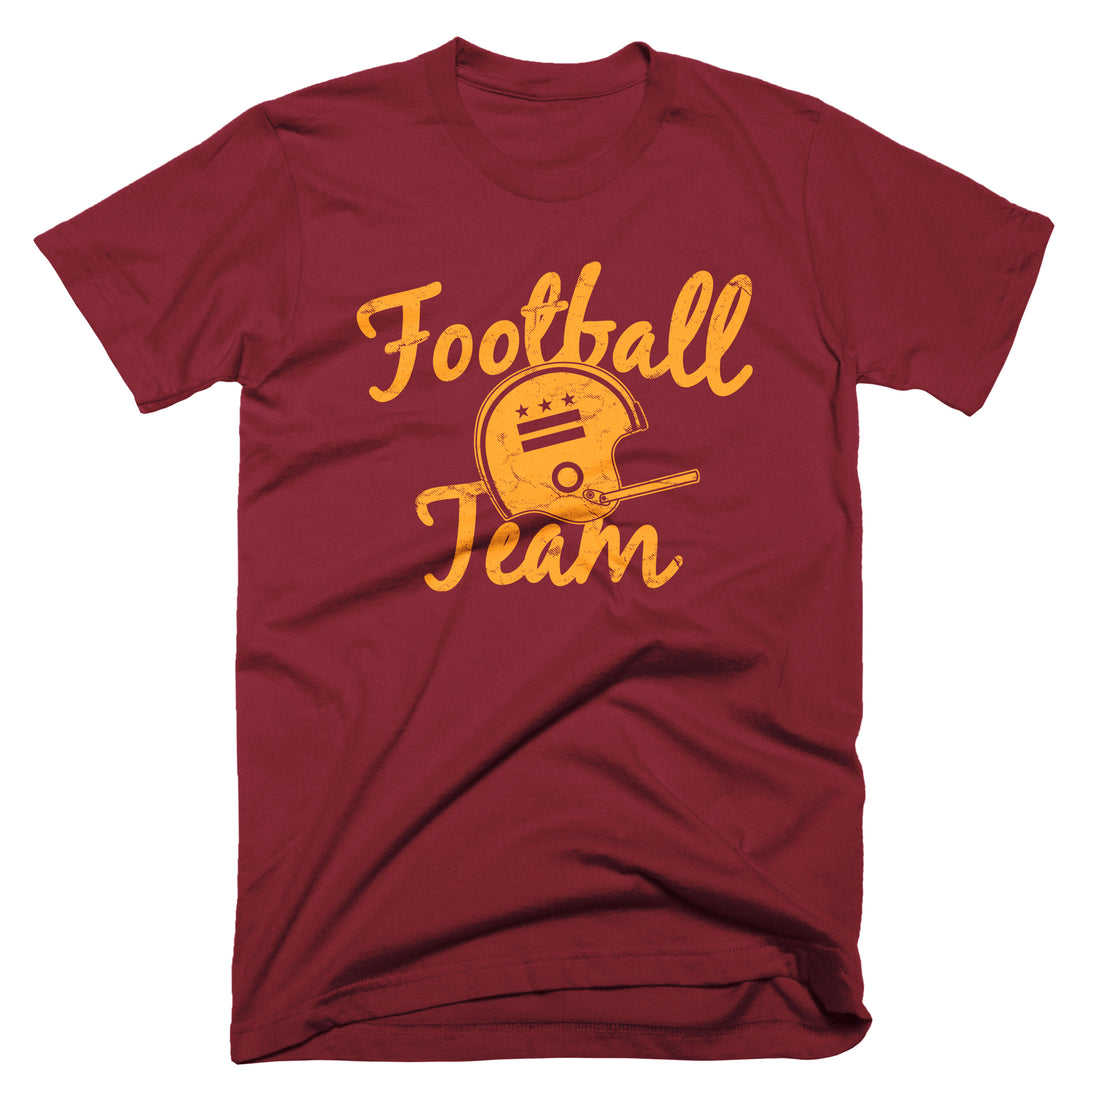 The Washington Football Team Shirt